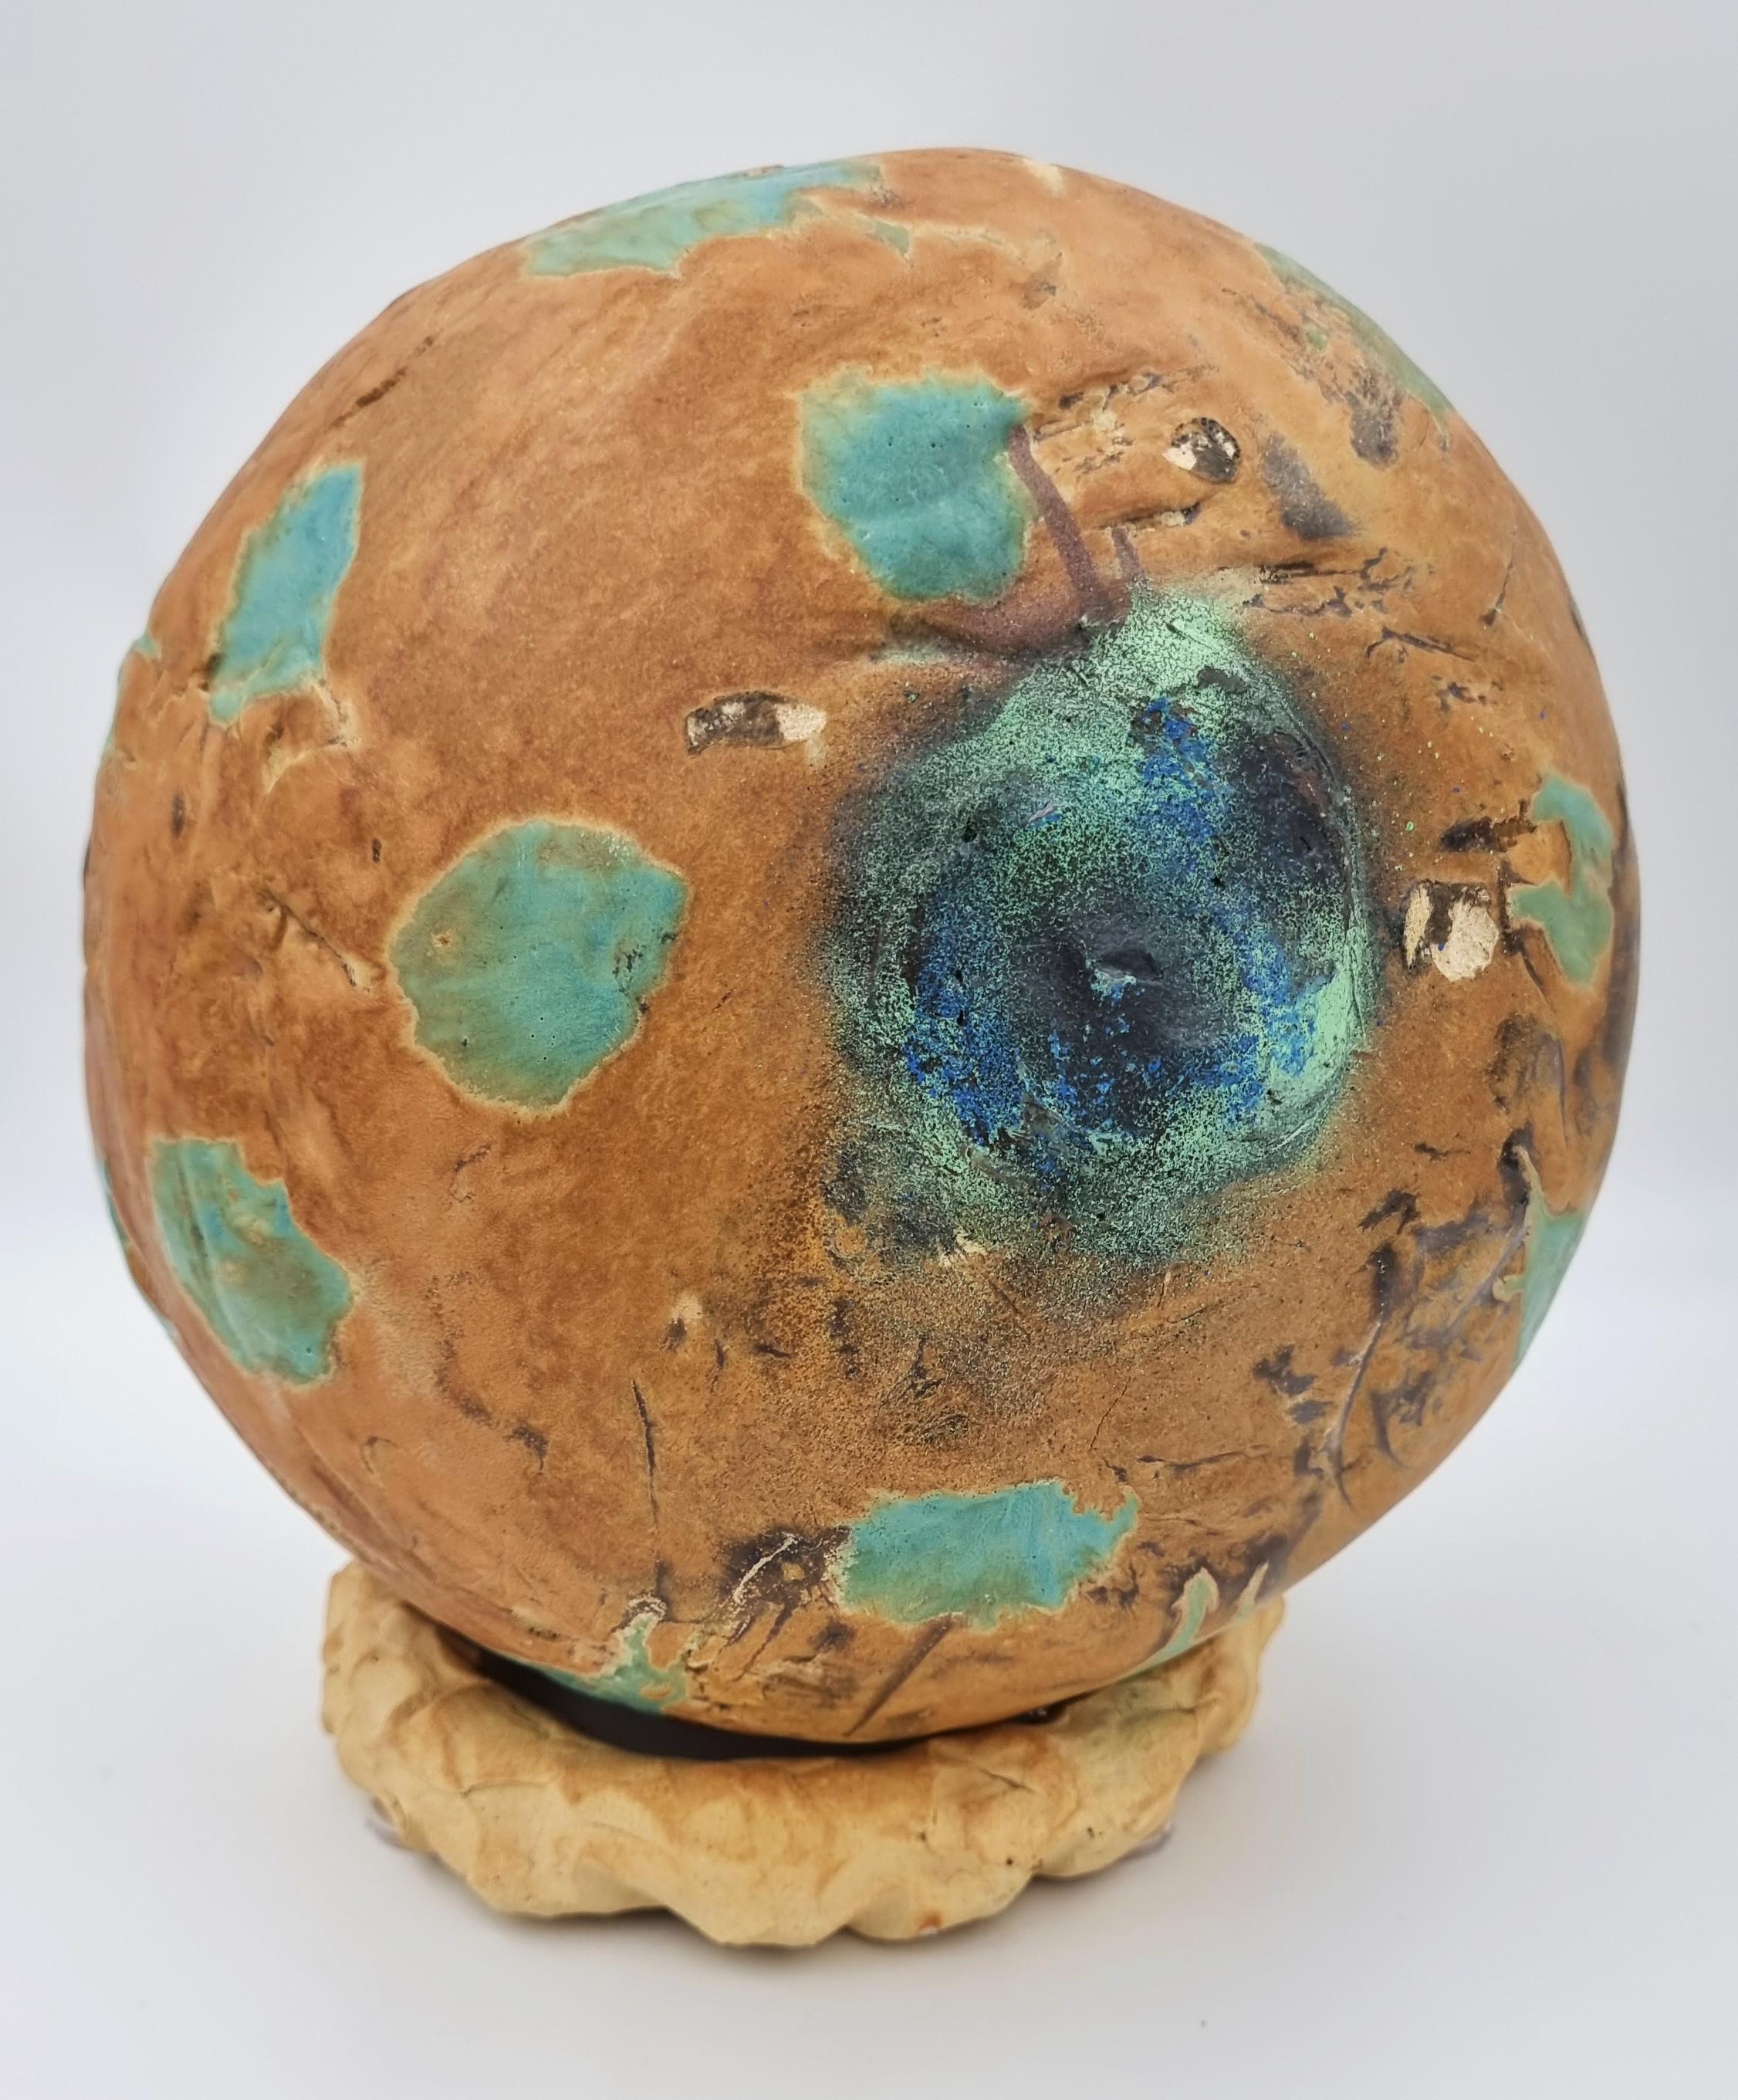 Carol Fleming
Untitled Sphere (Brown, teal)
Medium: Ceramic, glaze
Year: 2020
Size: 12